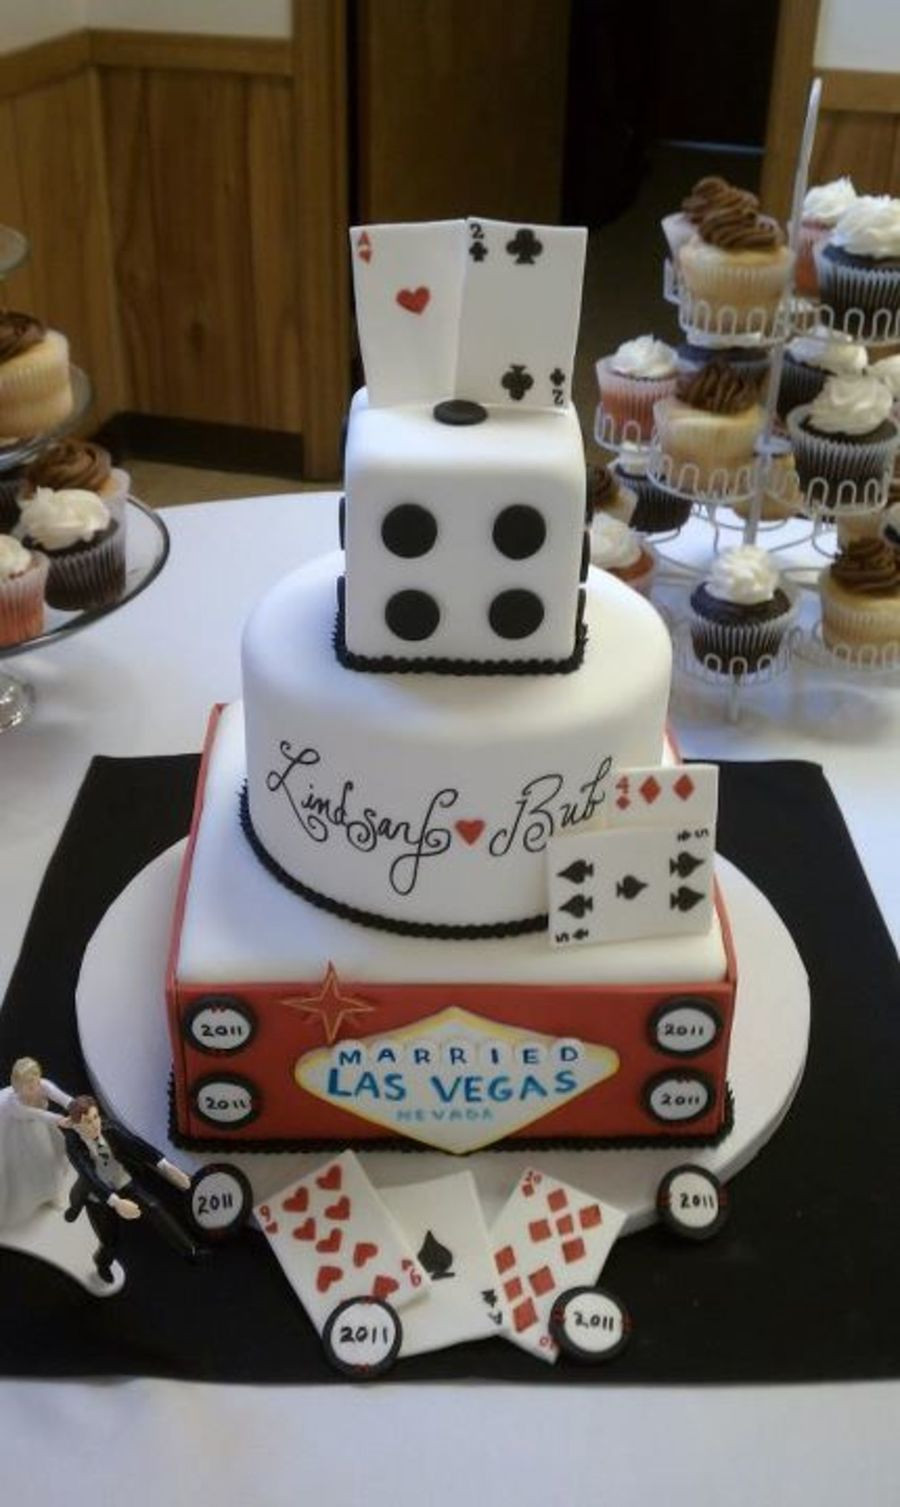 Wedding Cake Las Vegas
 Las Vegas Themed Wedding Cake CakeCentral